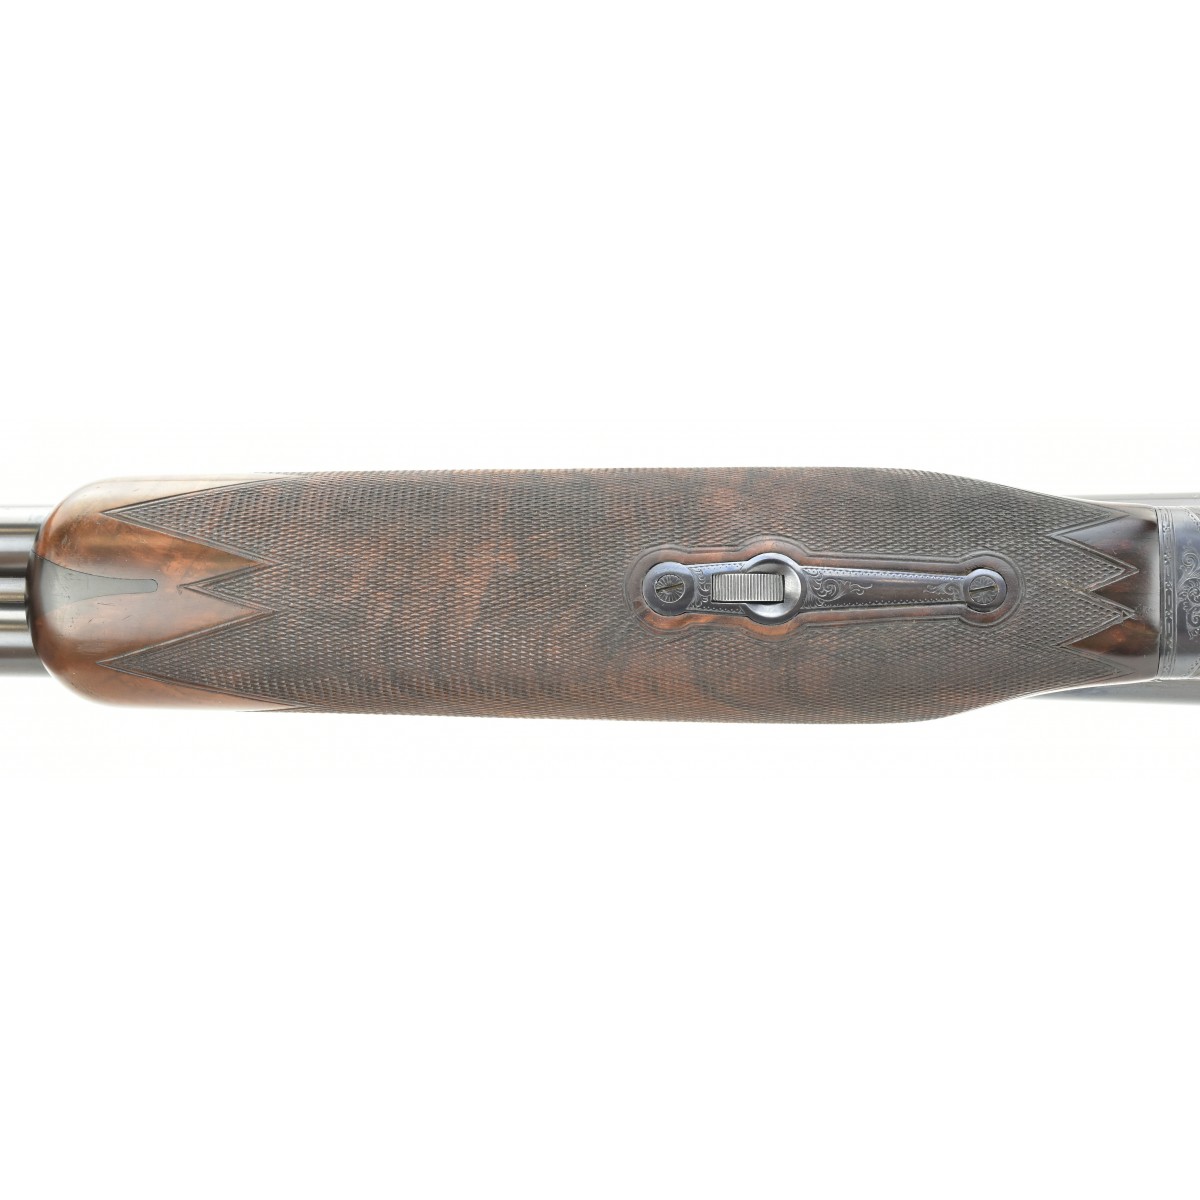 Winchester 21 Deluxe Grade IV Engraved 12 Gauge shotgun for sale.